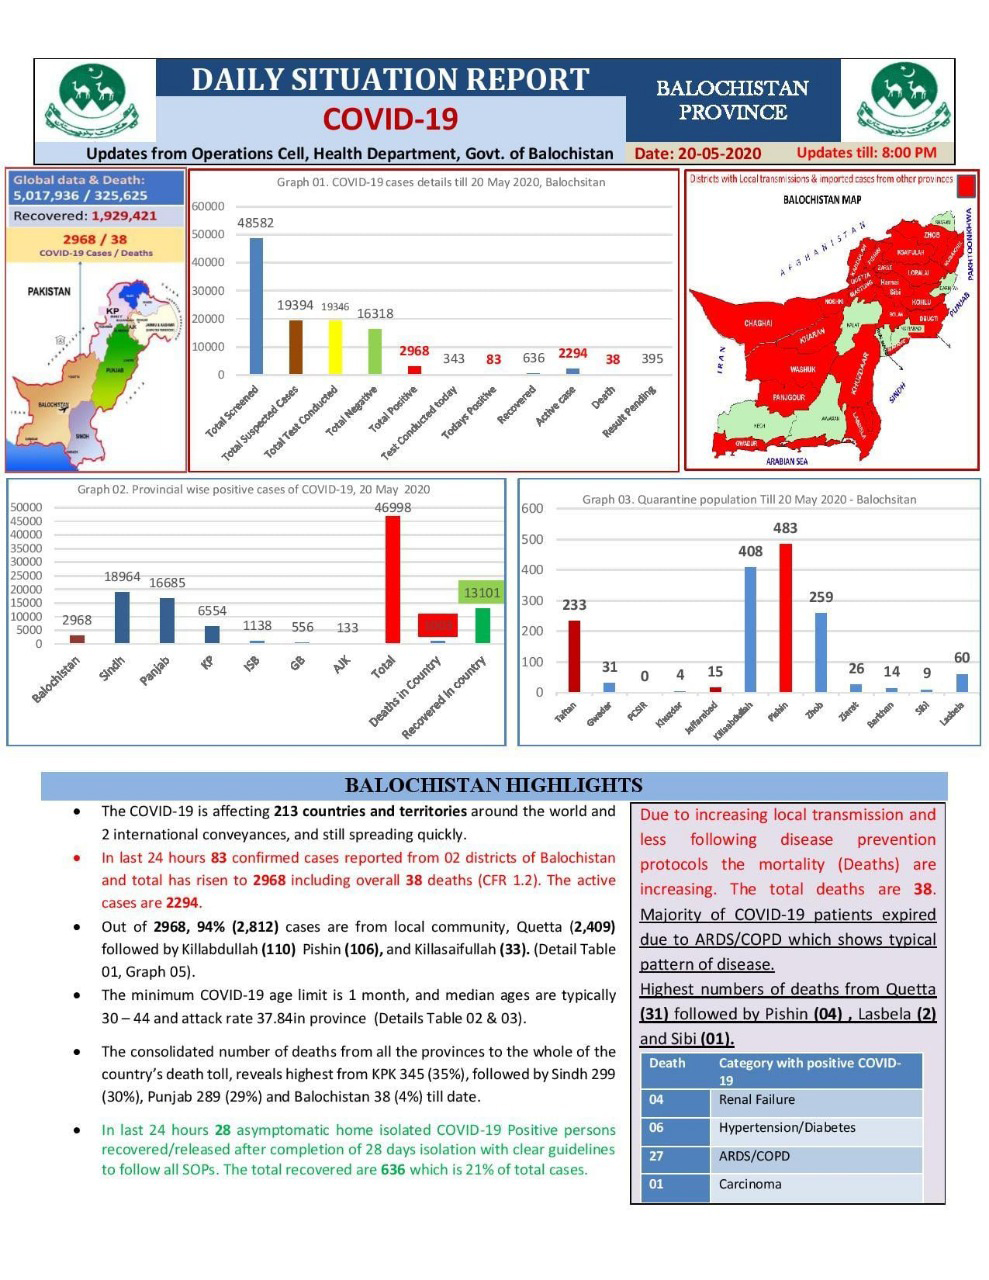 Coronavirus updates, May 20: Latest news on the COVID-19 pandemic from Pakistan and around the world